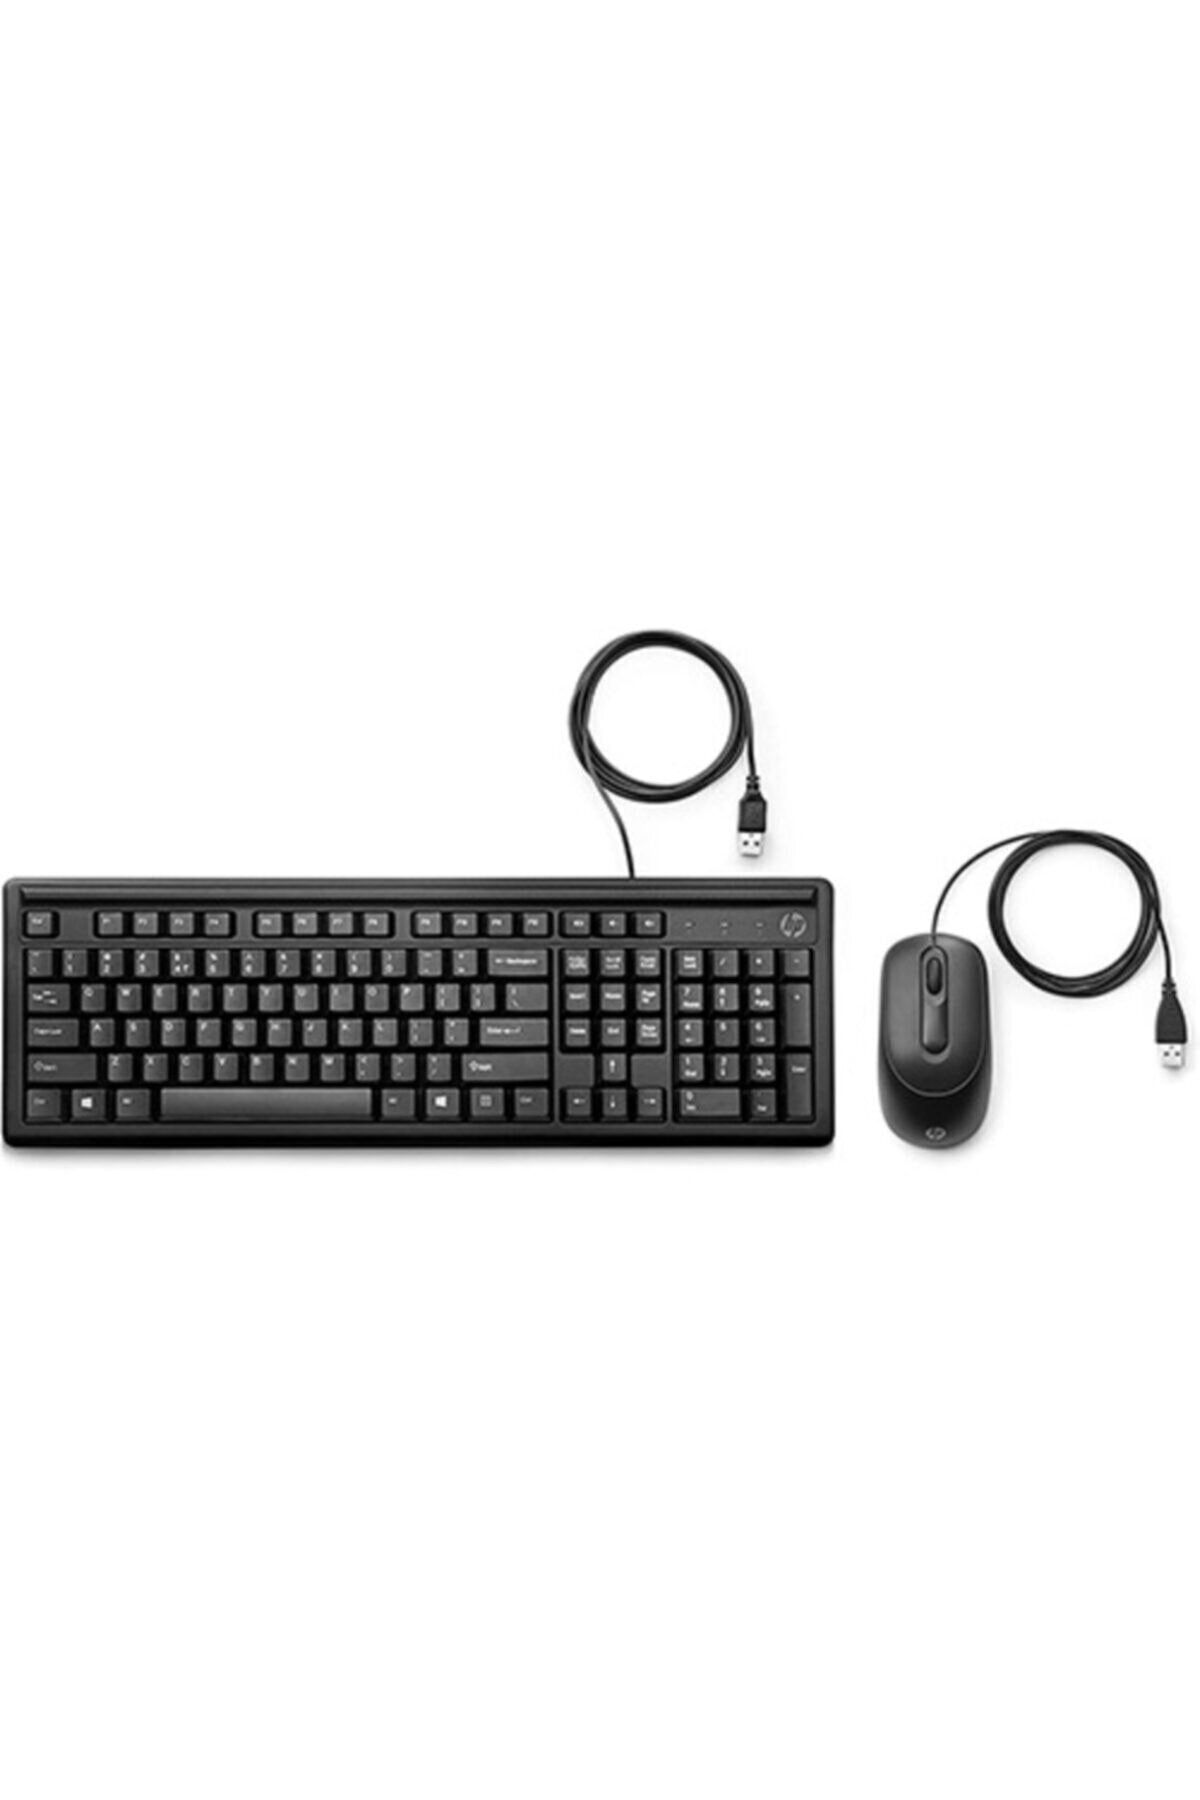 HP 160 Kablolu Klavye & Mouse Kombo Set - Siyah (türkçe)